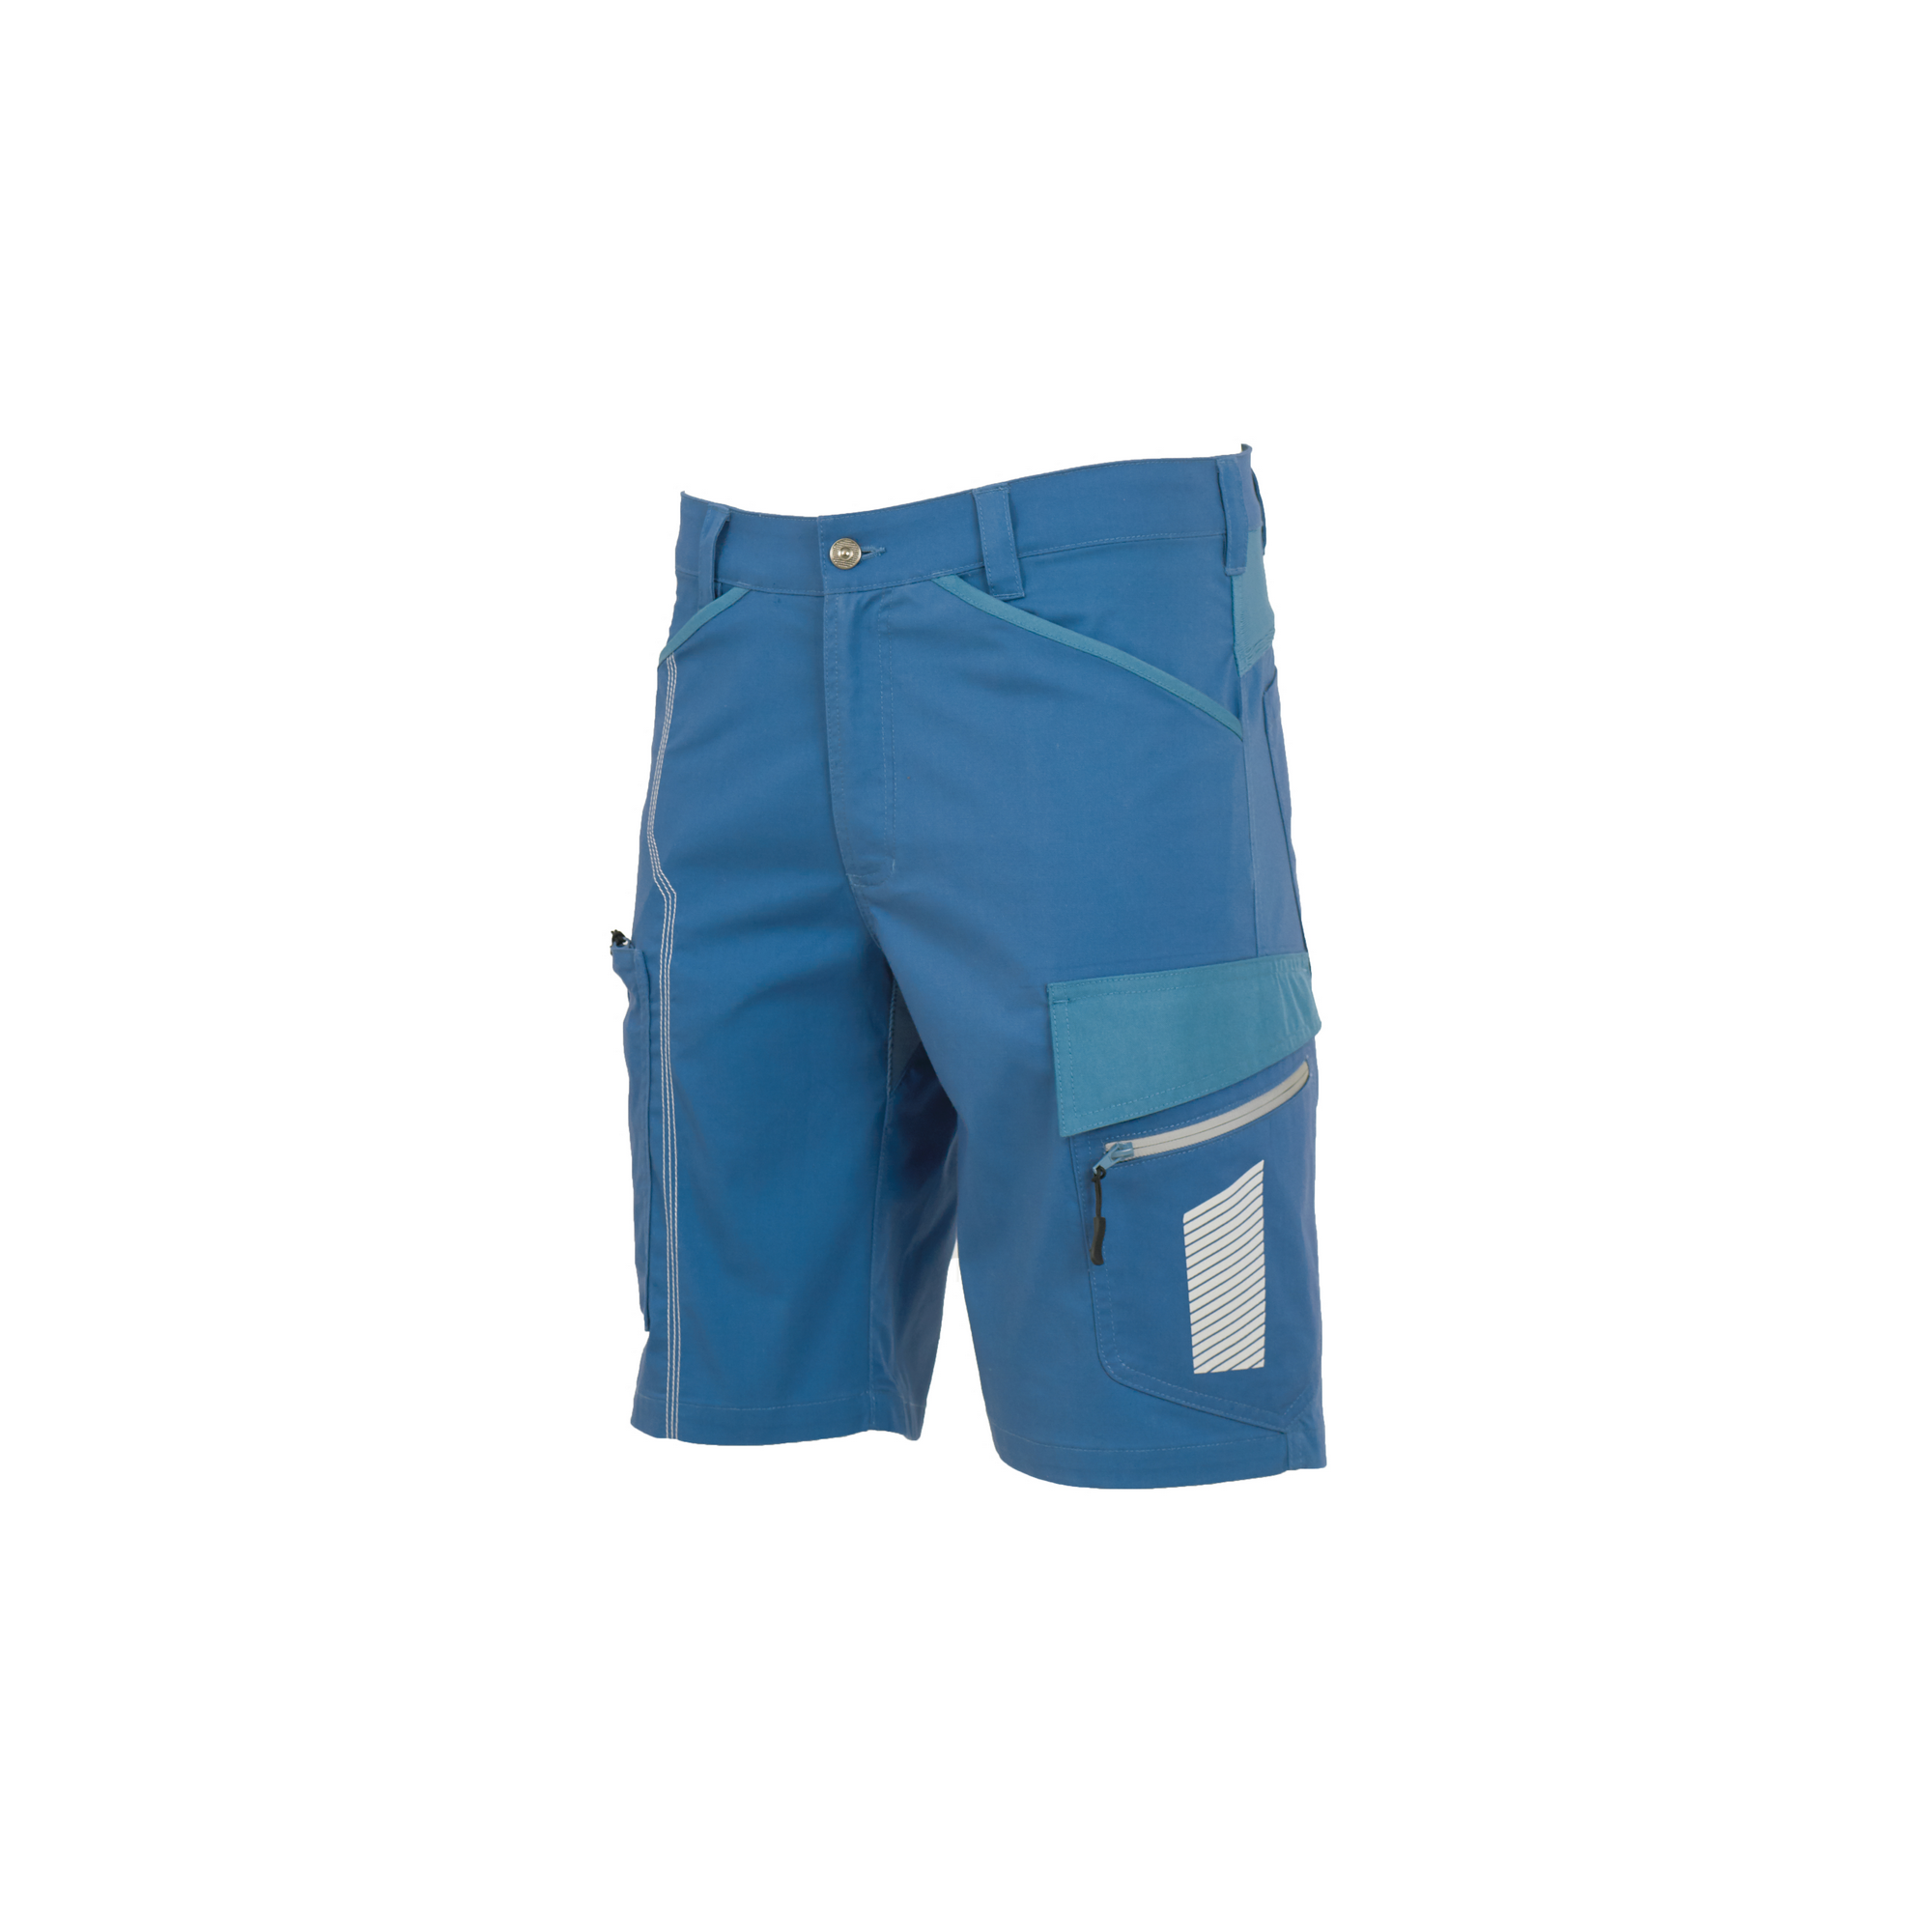 Shorts 'Taurus' blau 50 + product picture